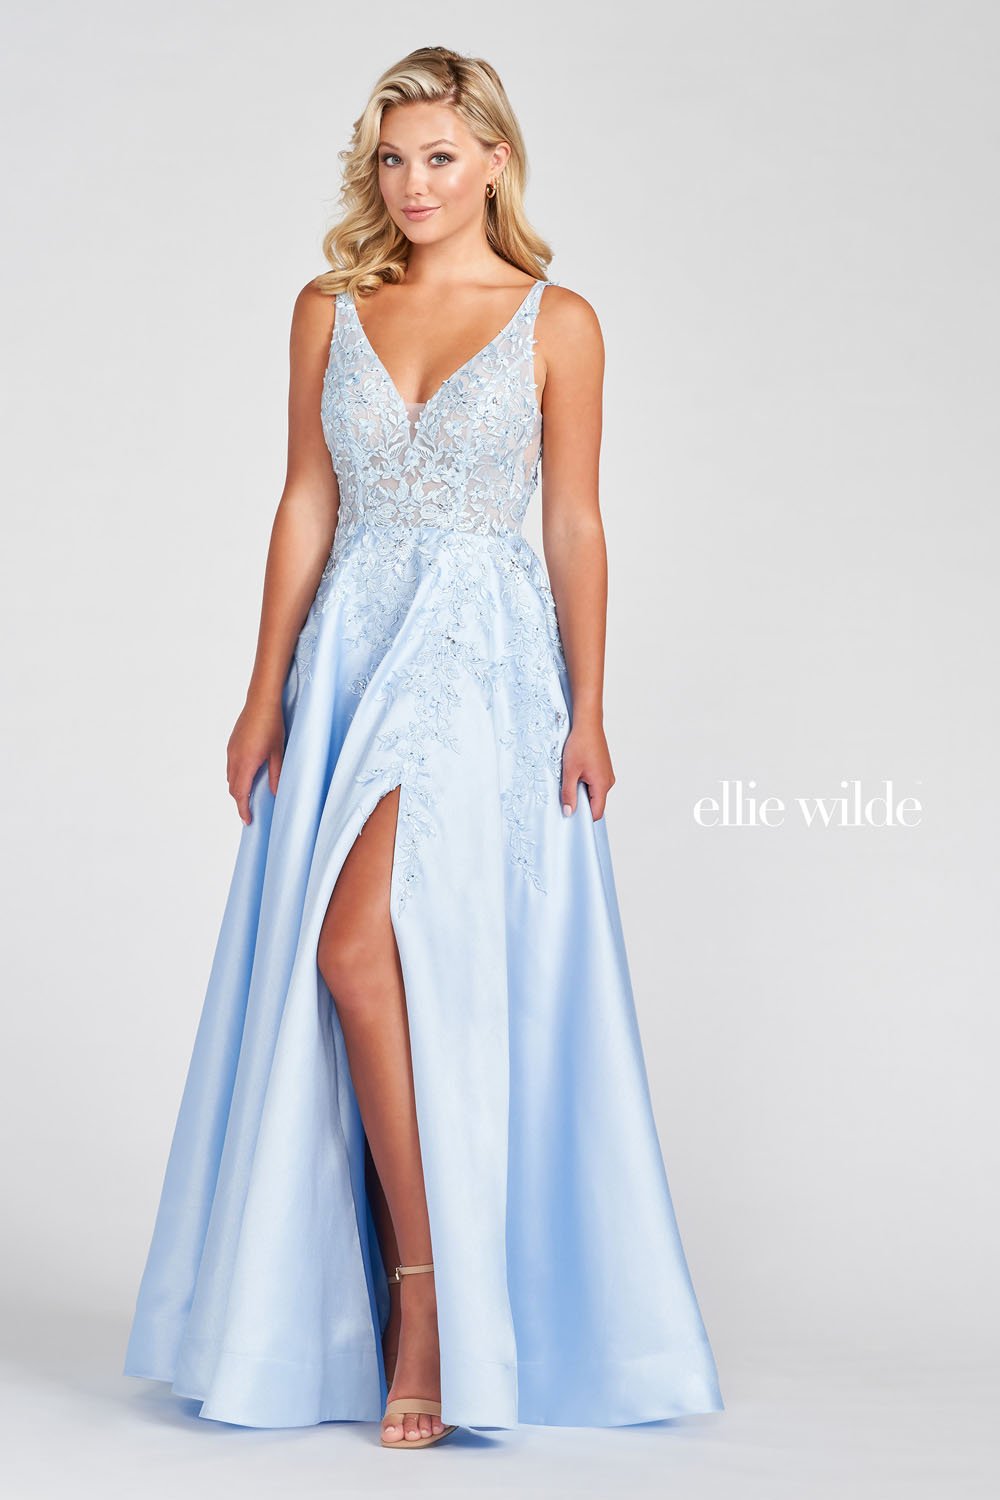 Ellie Wilde Light Blue EW122074 Prom Dress Image.  Light Blue formal dress.